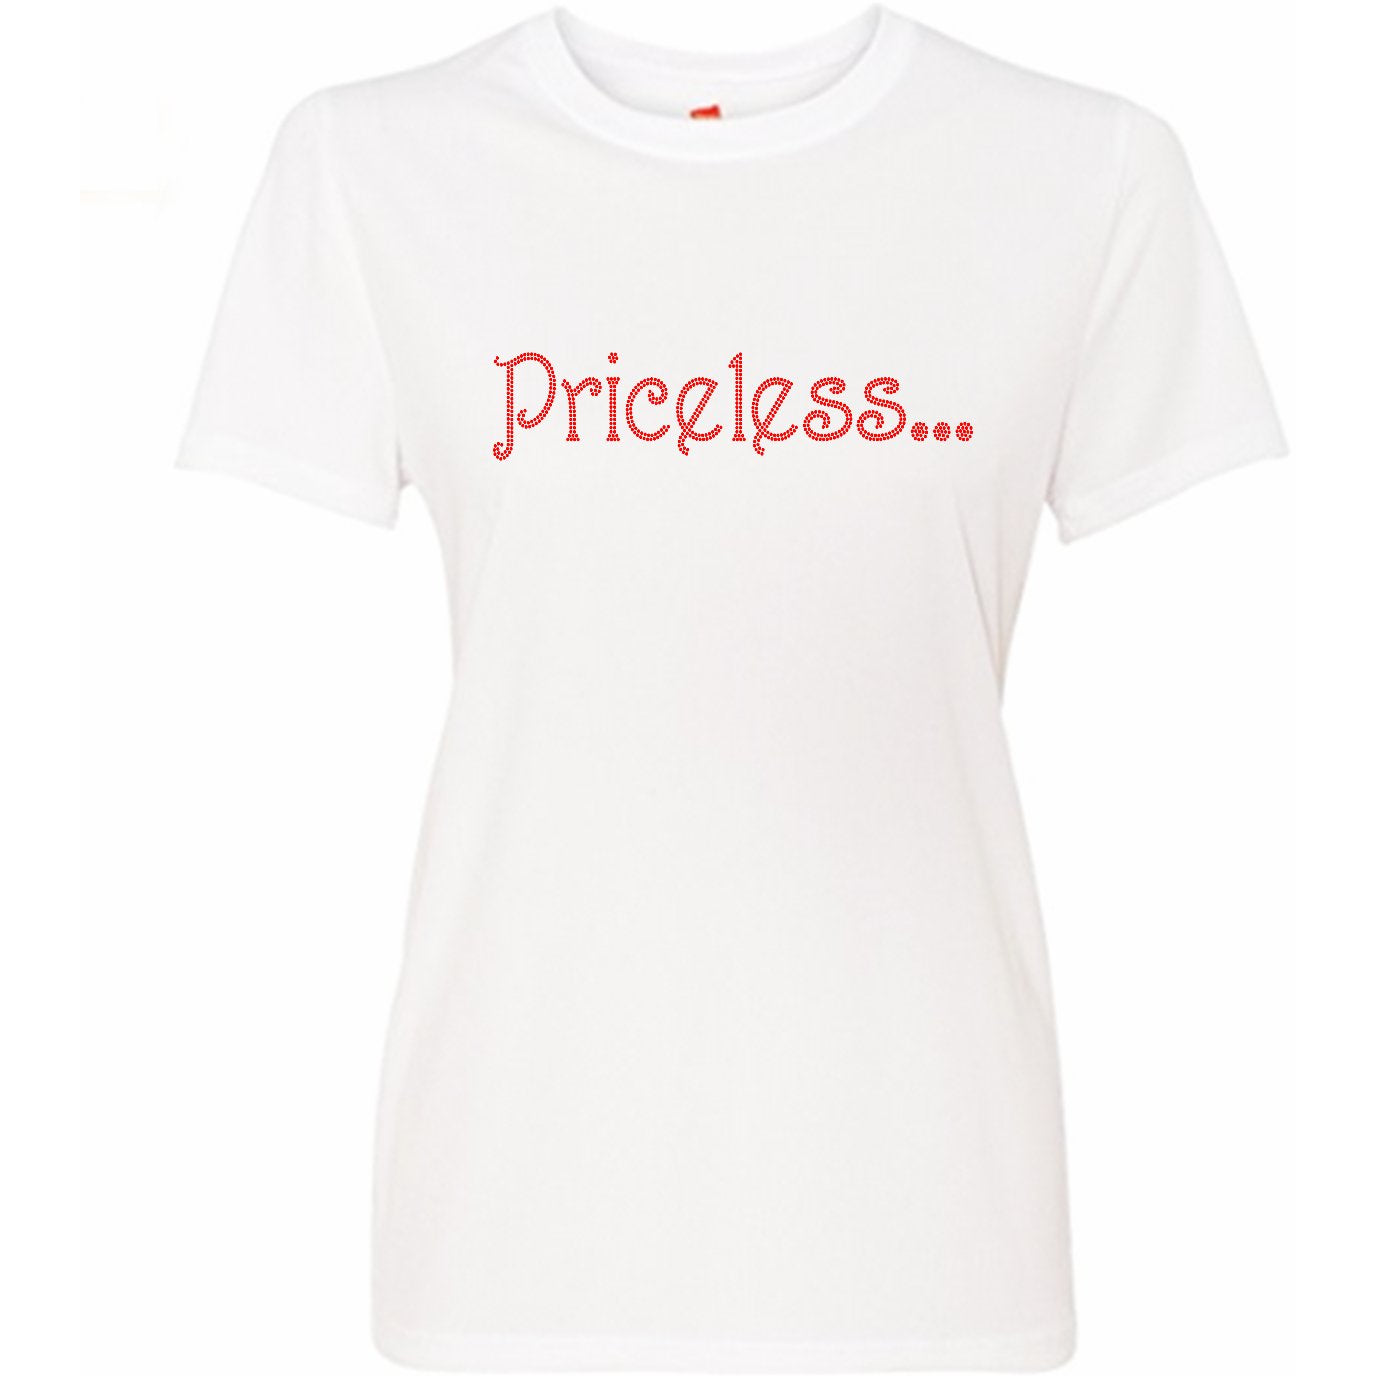 Priceless Rhinestone Self Expression T Shirt